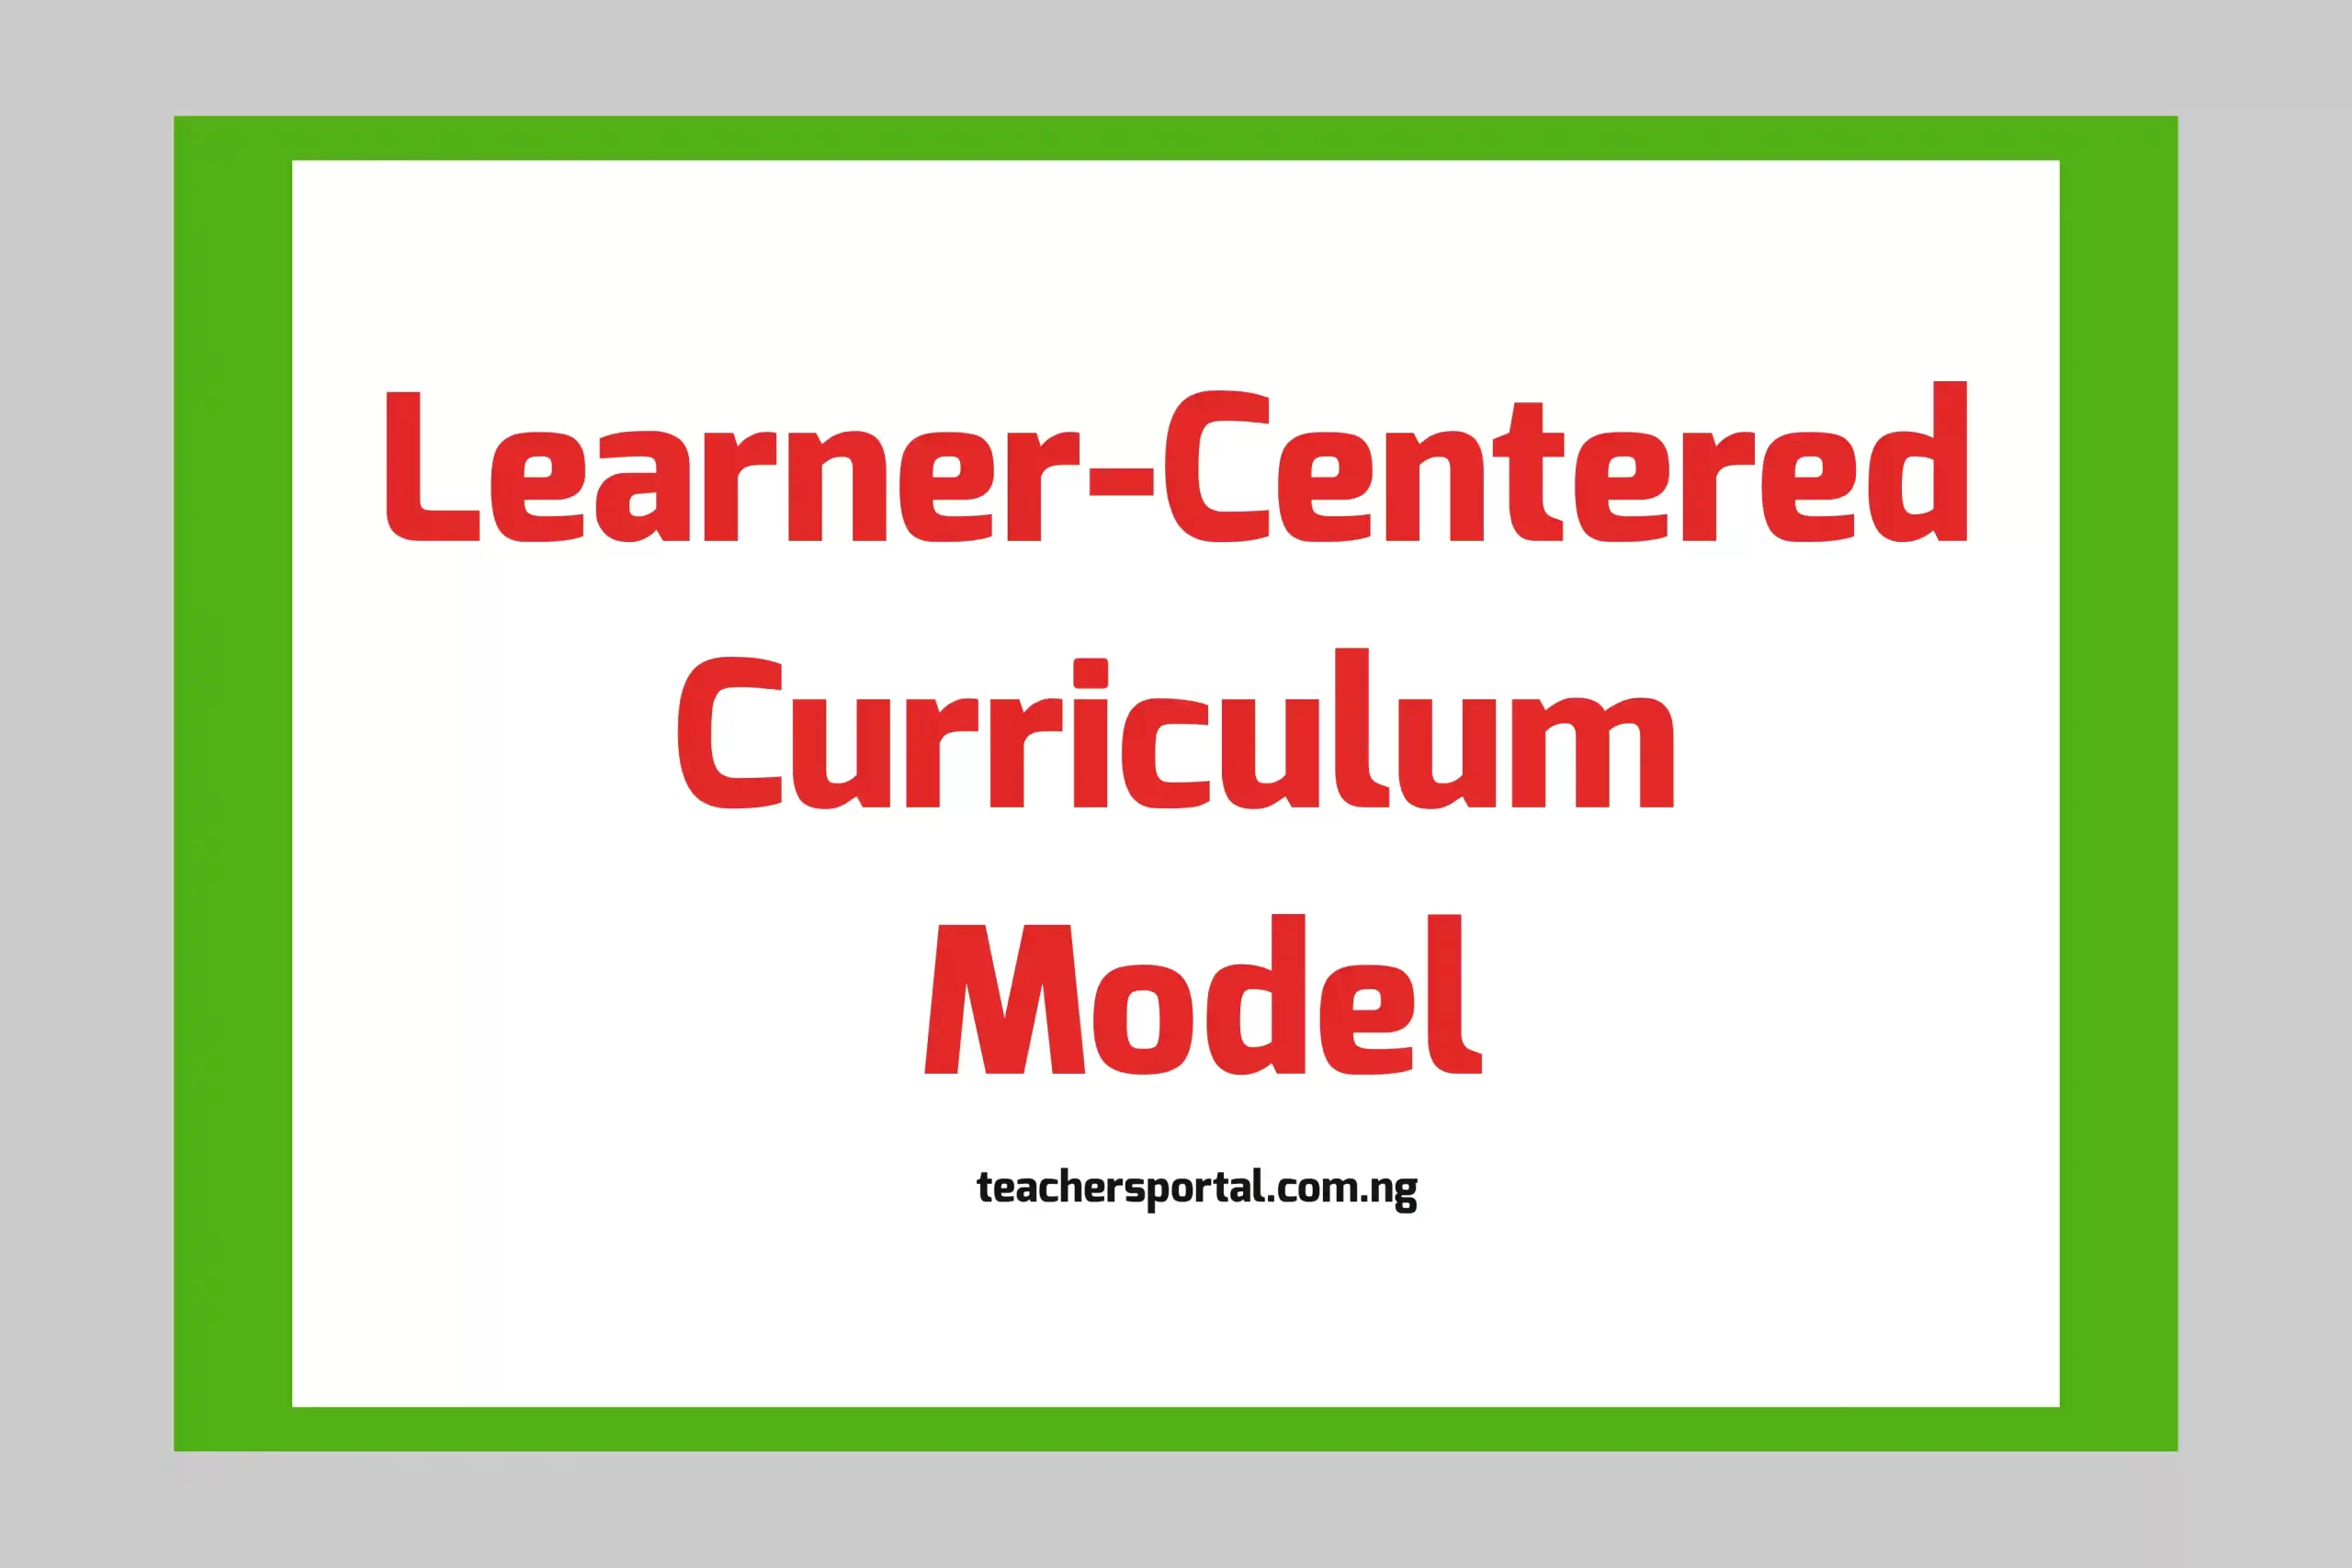 Learner-Centered Curriculum Model